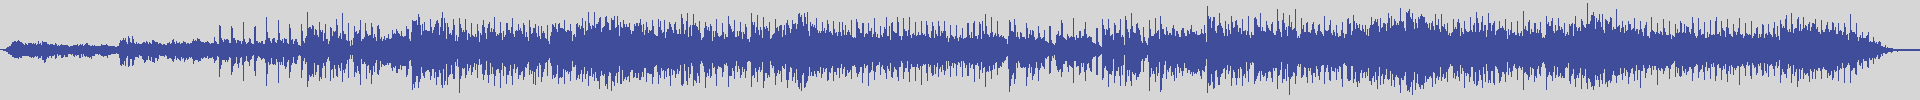 digiphonic_records [DPR006] Nino D'Angelo - Maledetto Treno [Original Mix] audio wave form